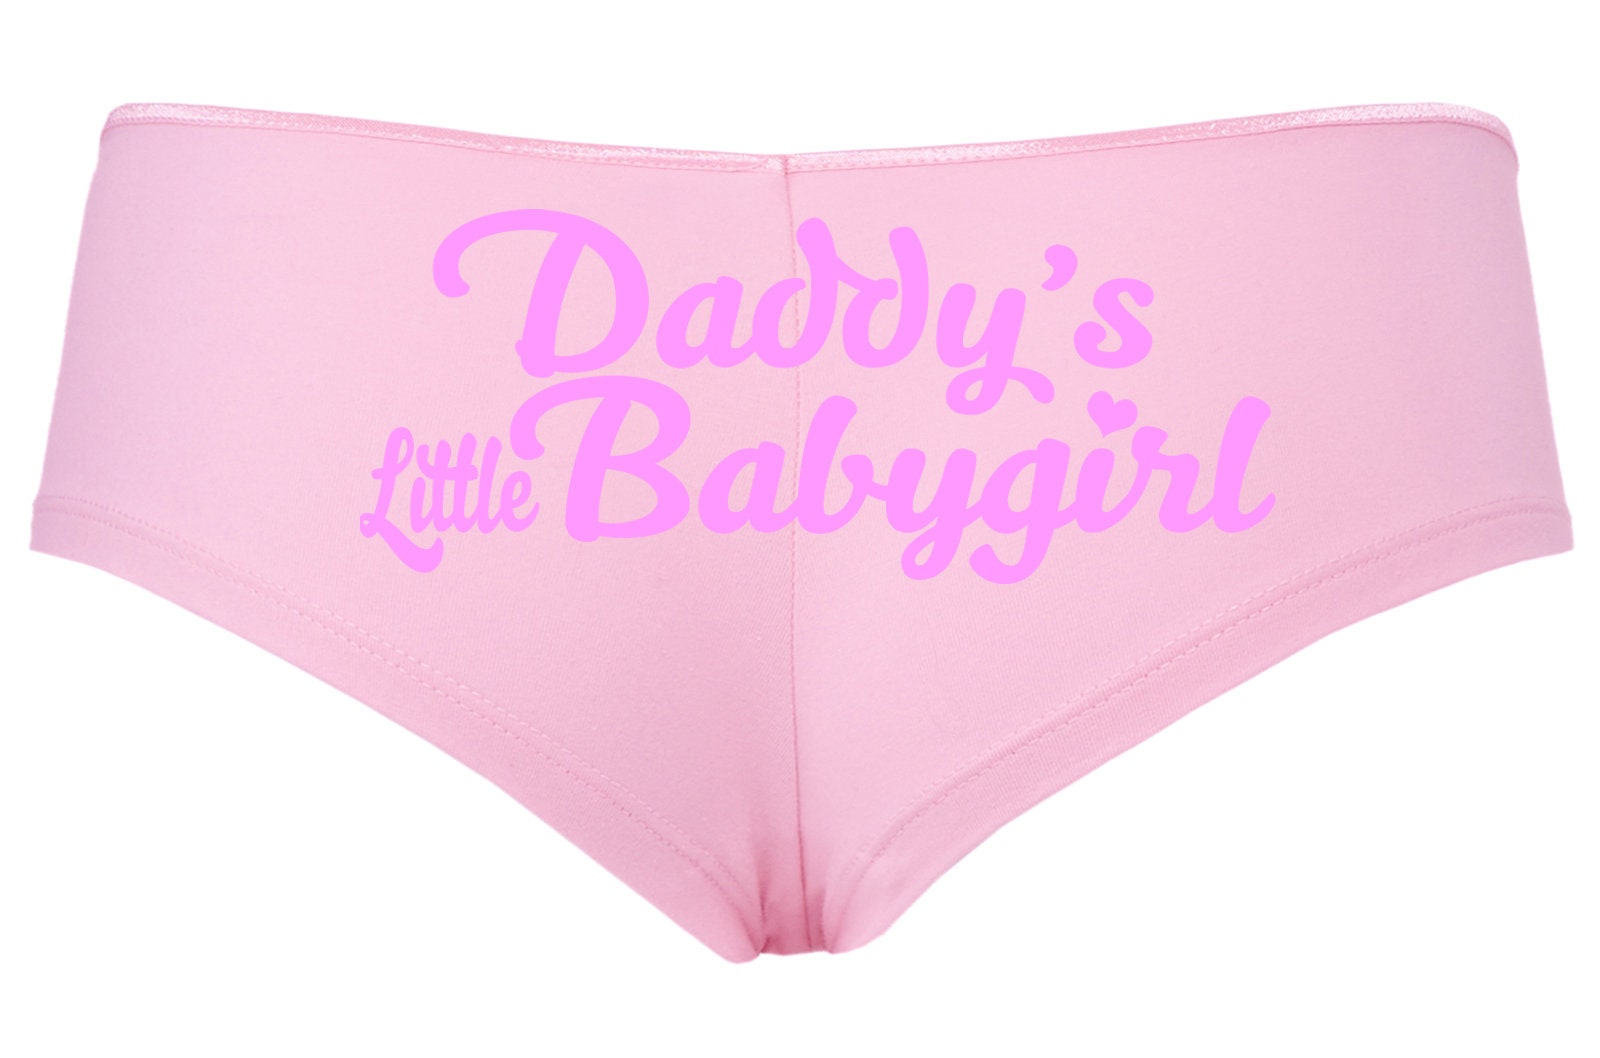 Daddy panties compilation